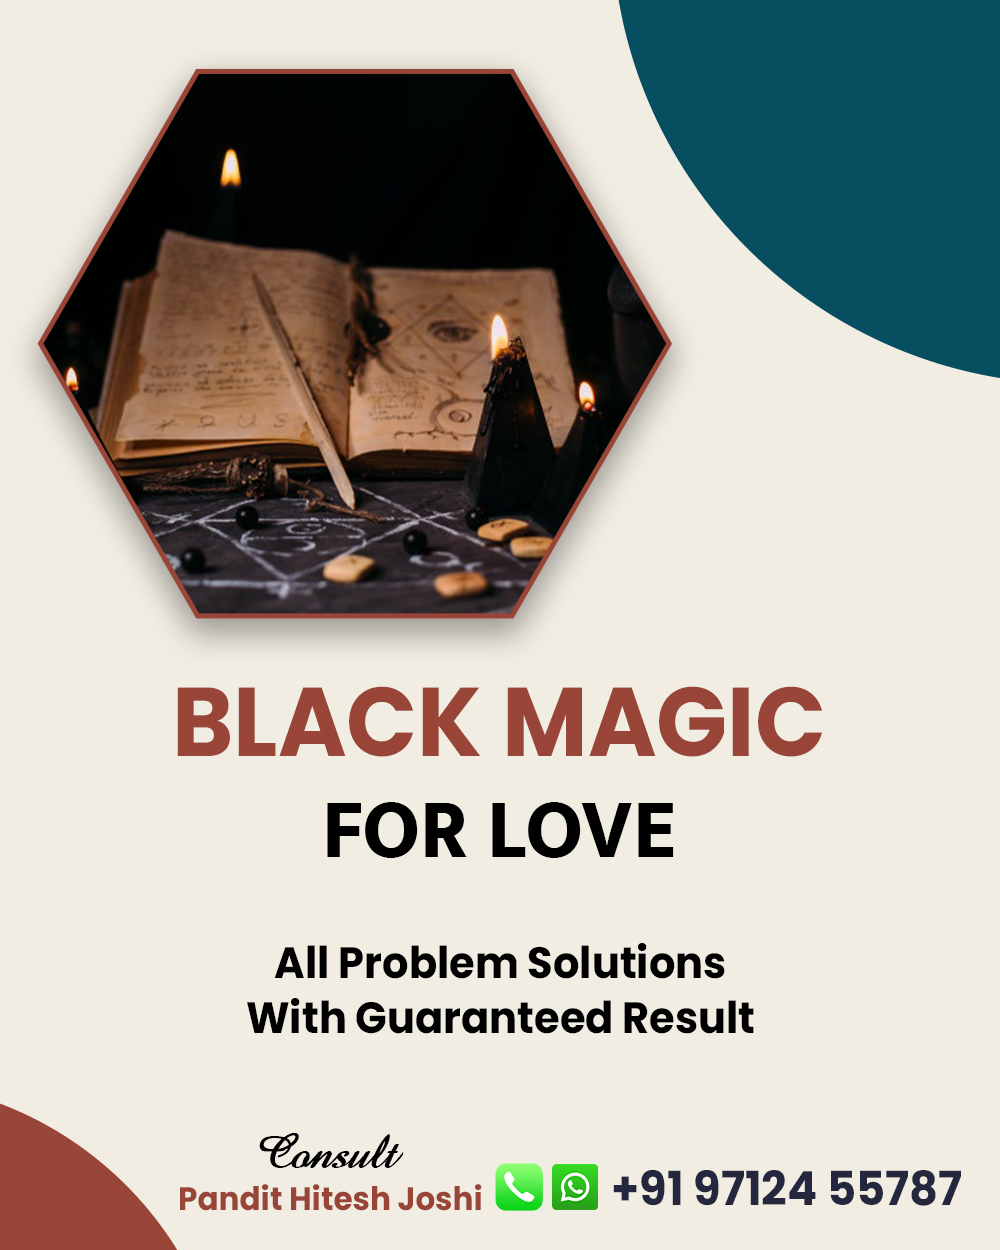 Black Magic Expert